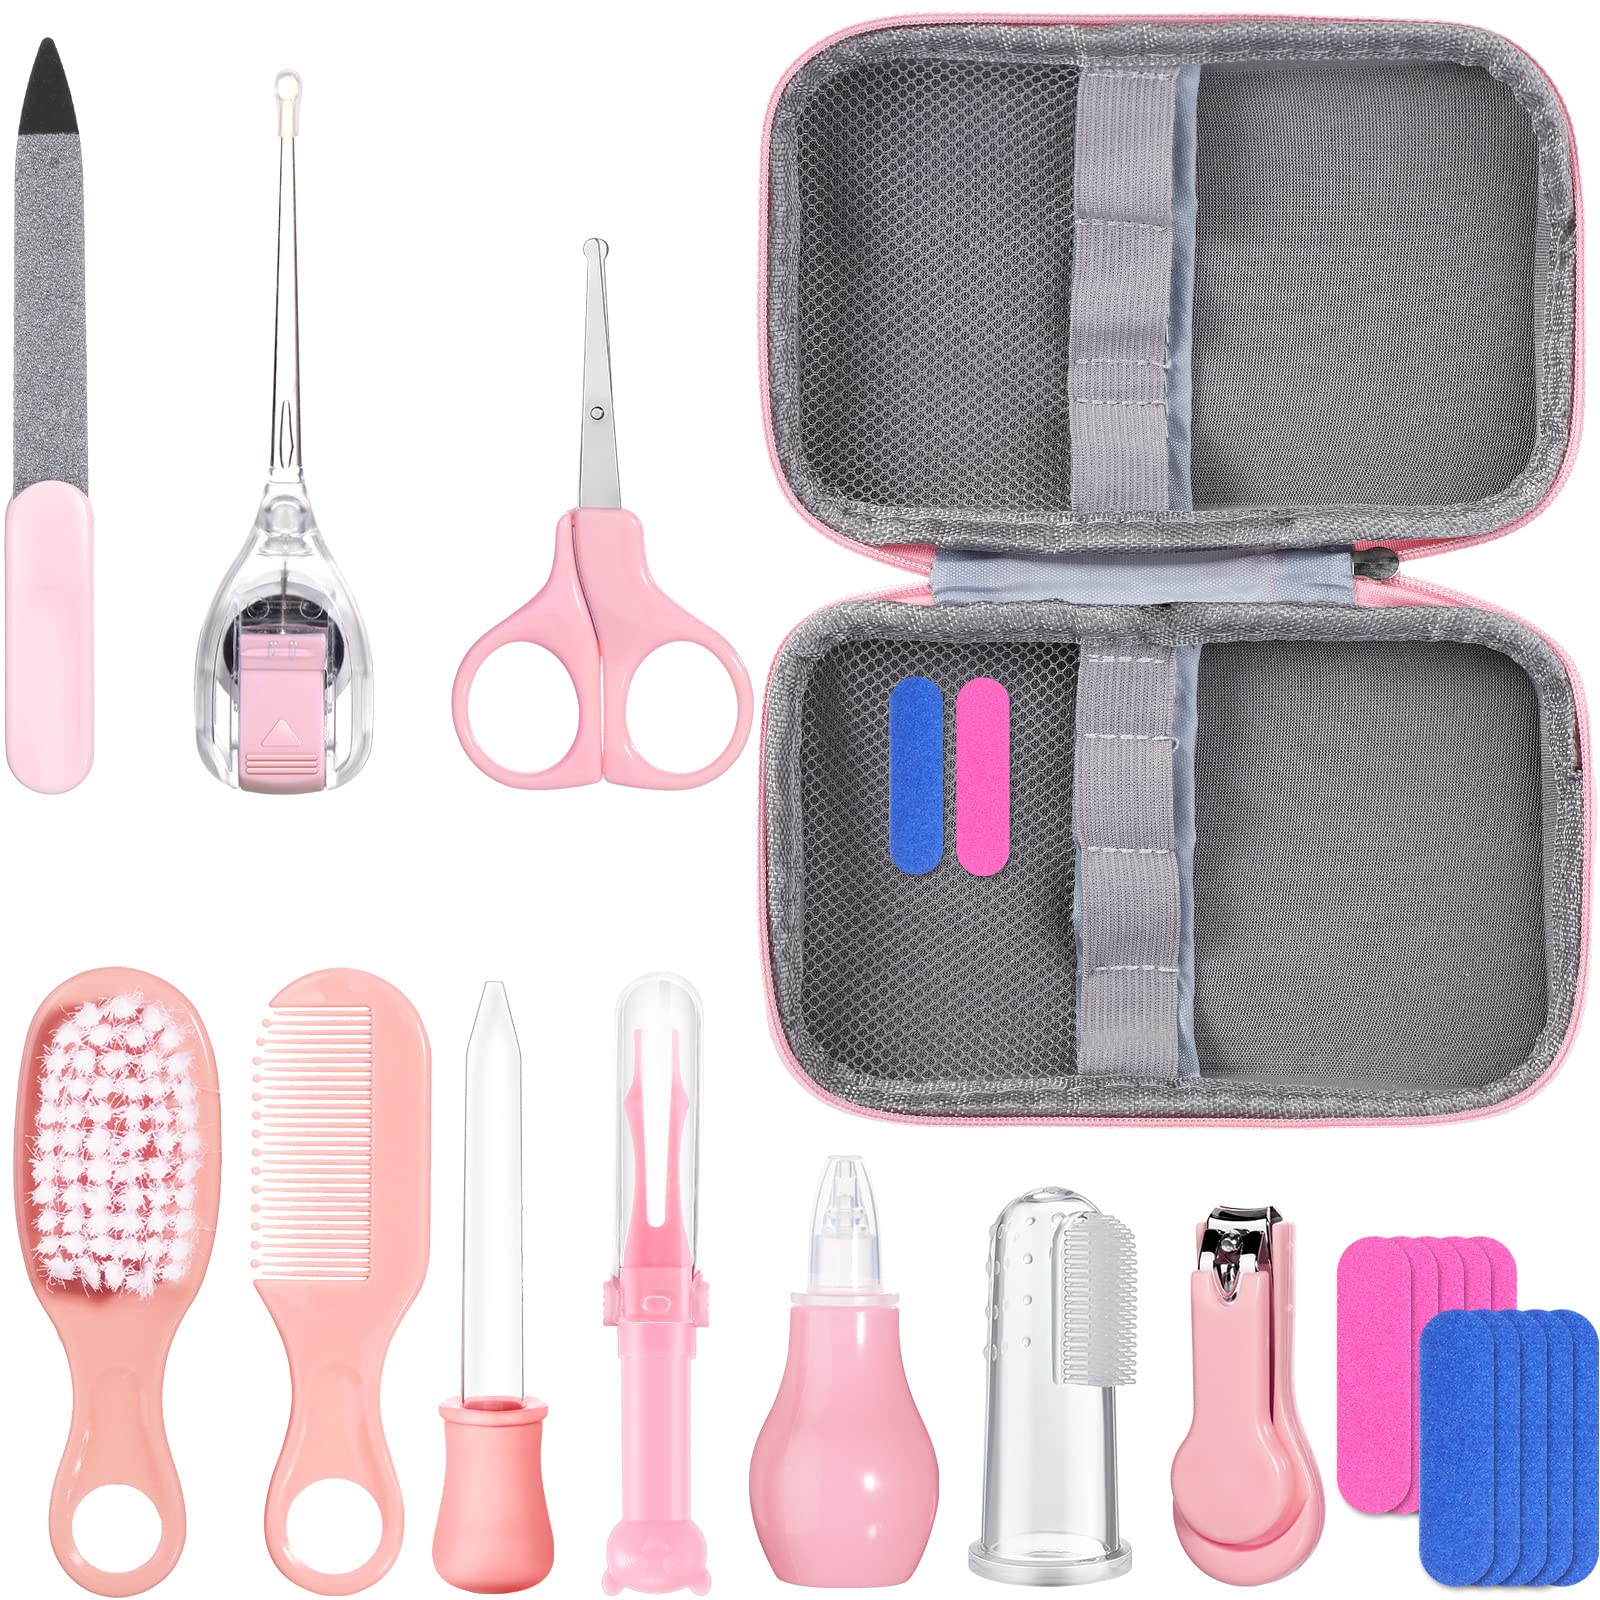 Travel Kits Nail File, Comb, Scissors, Toothbrush, Tweezers, Nail